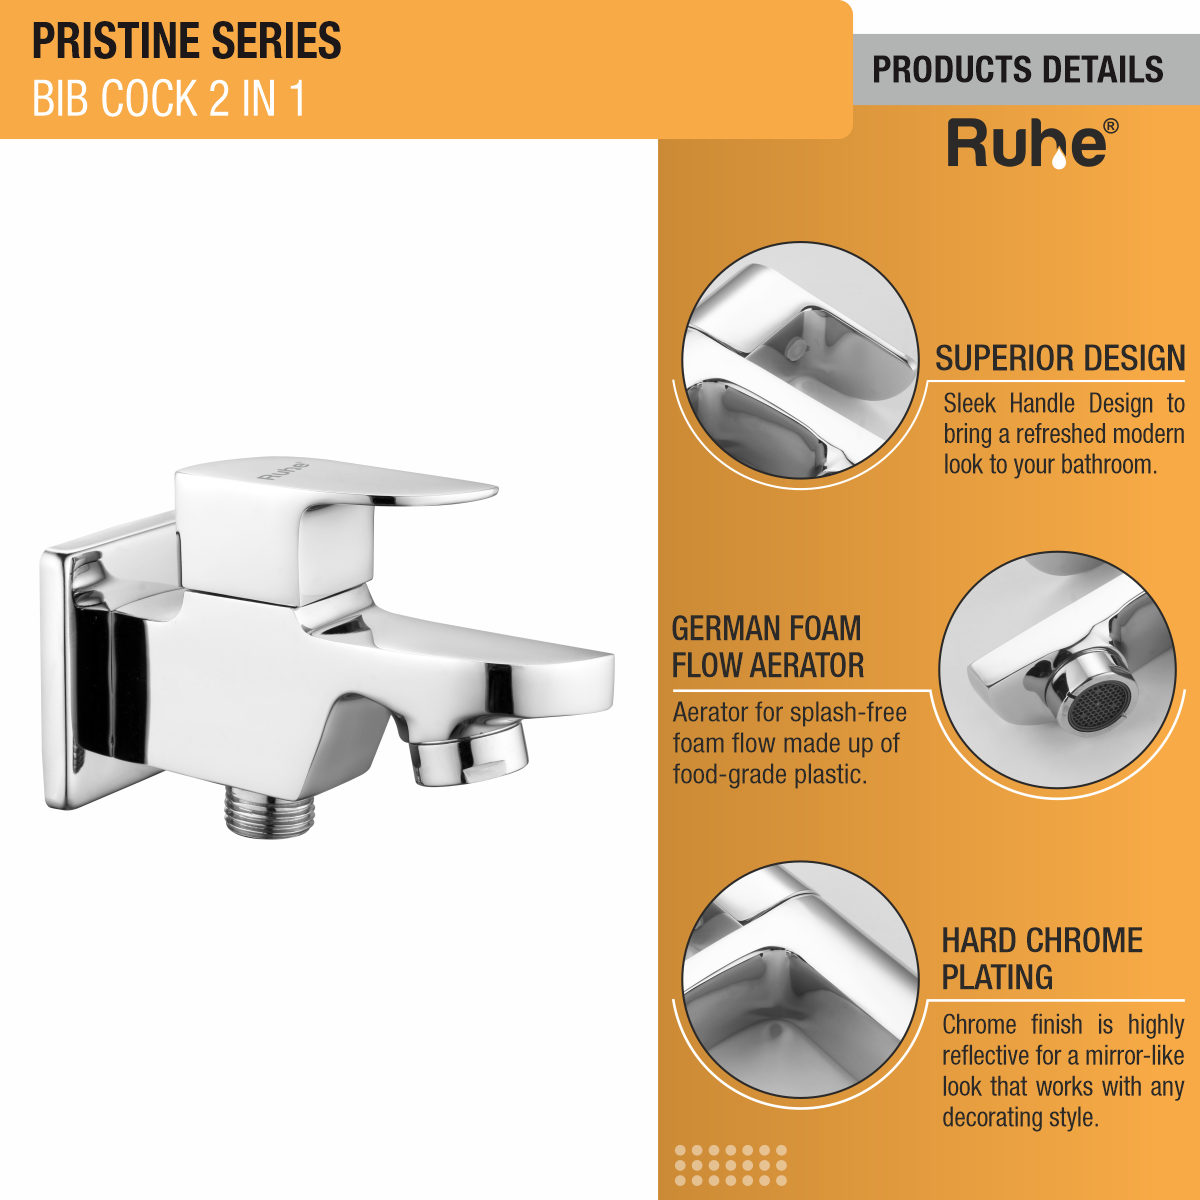 Pristine Two Way Bib Tap Faucet product details